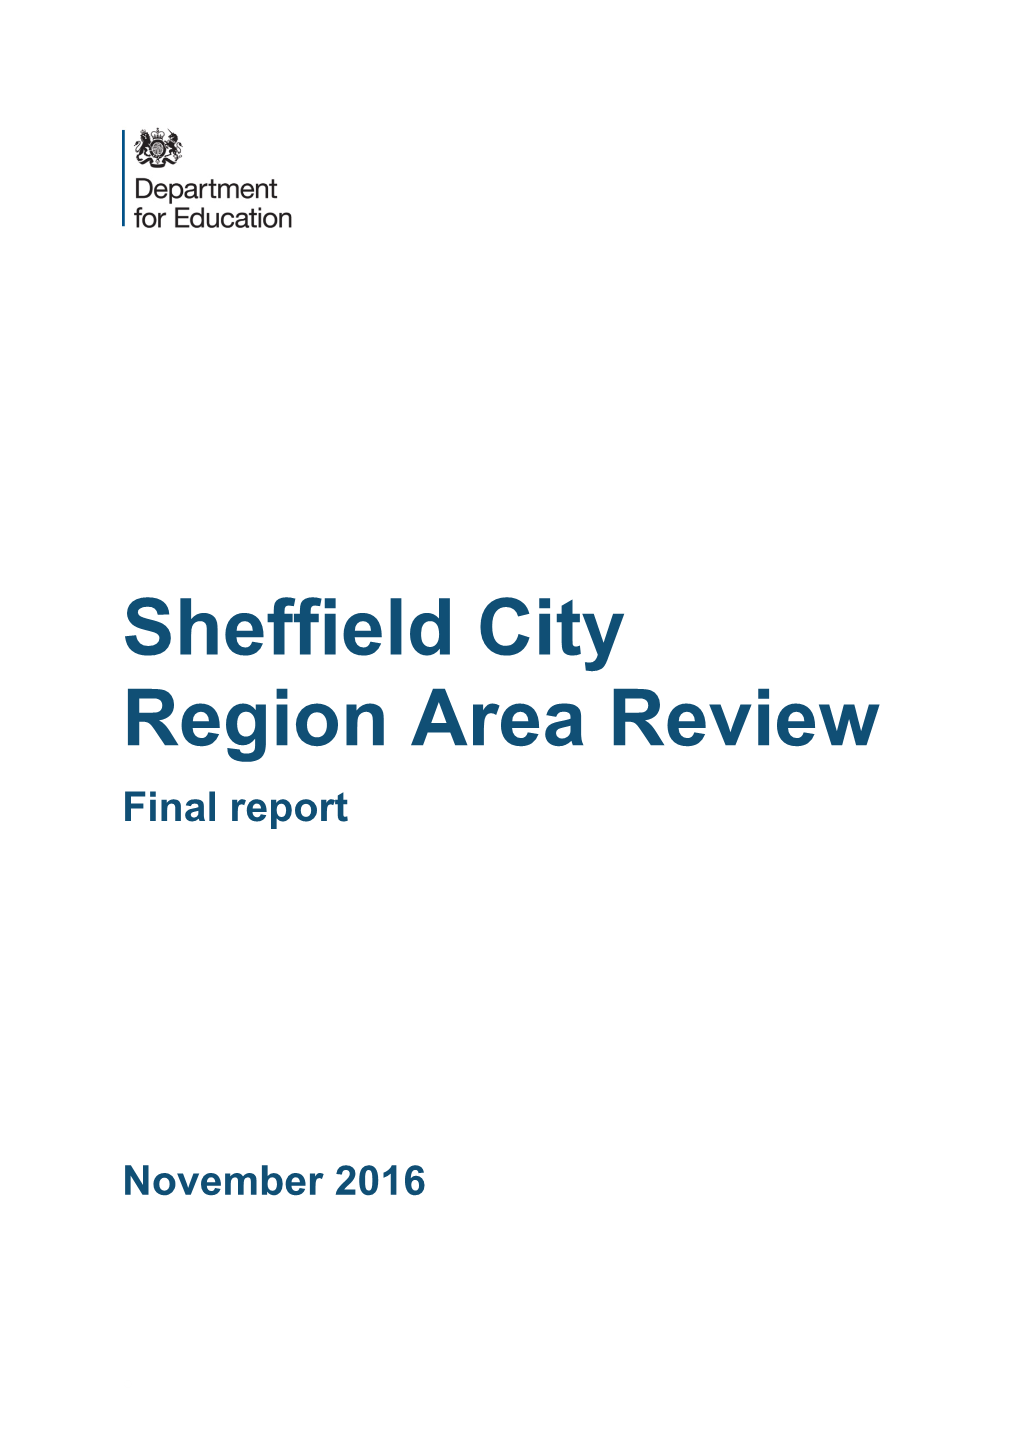 Sheffield City Region Area Review Final Report